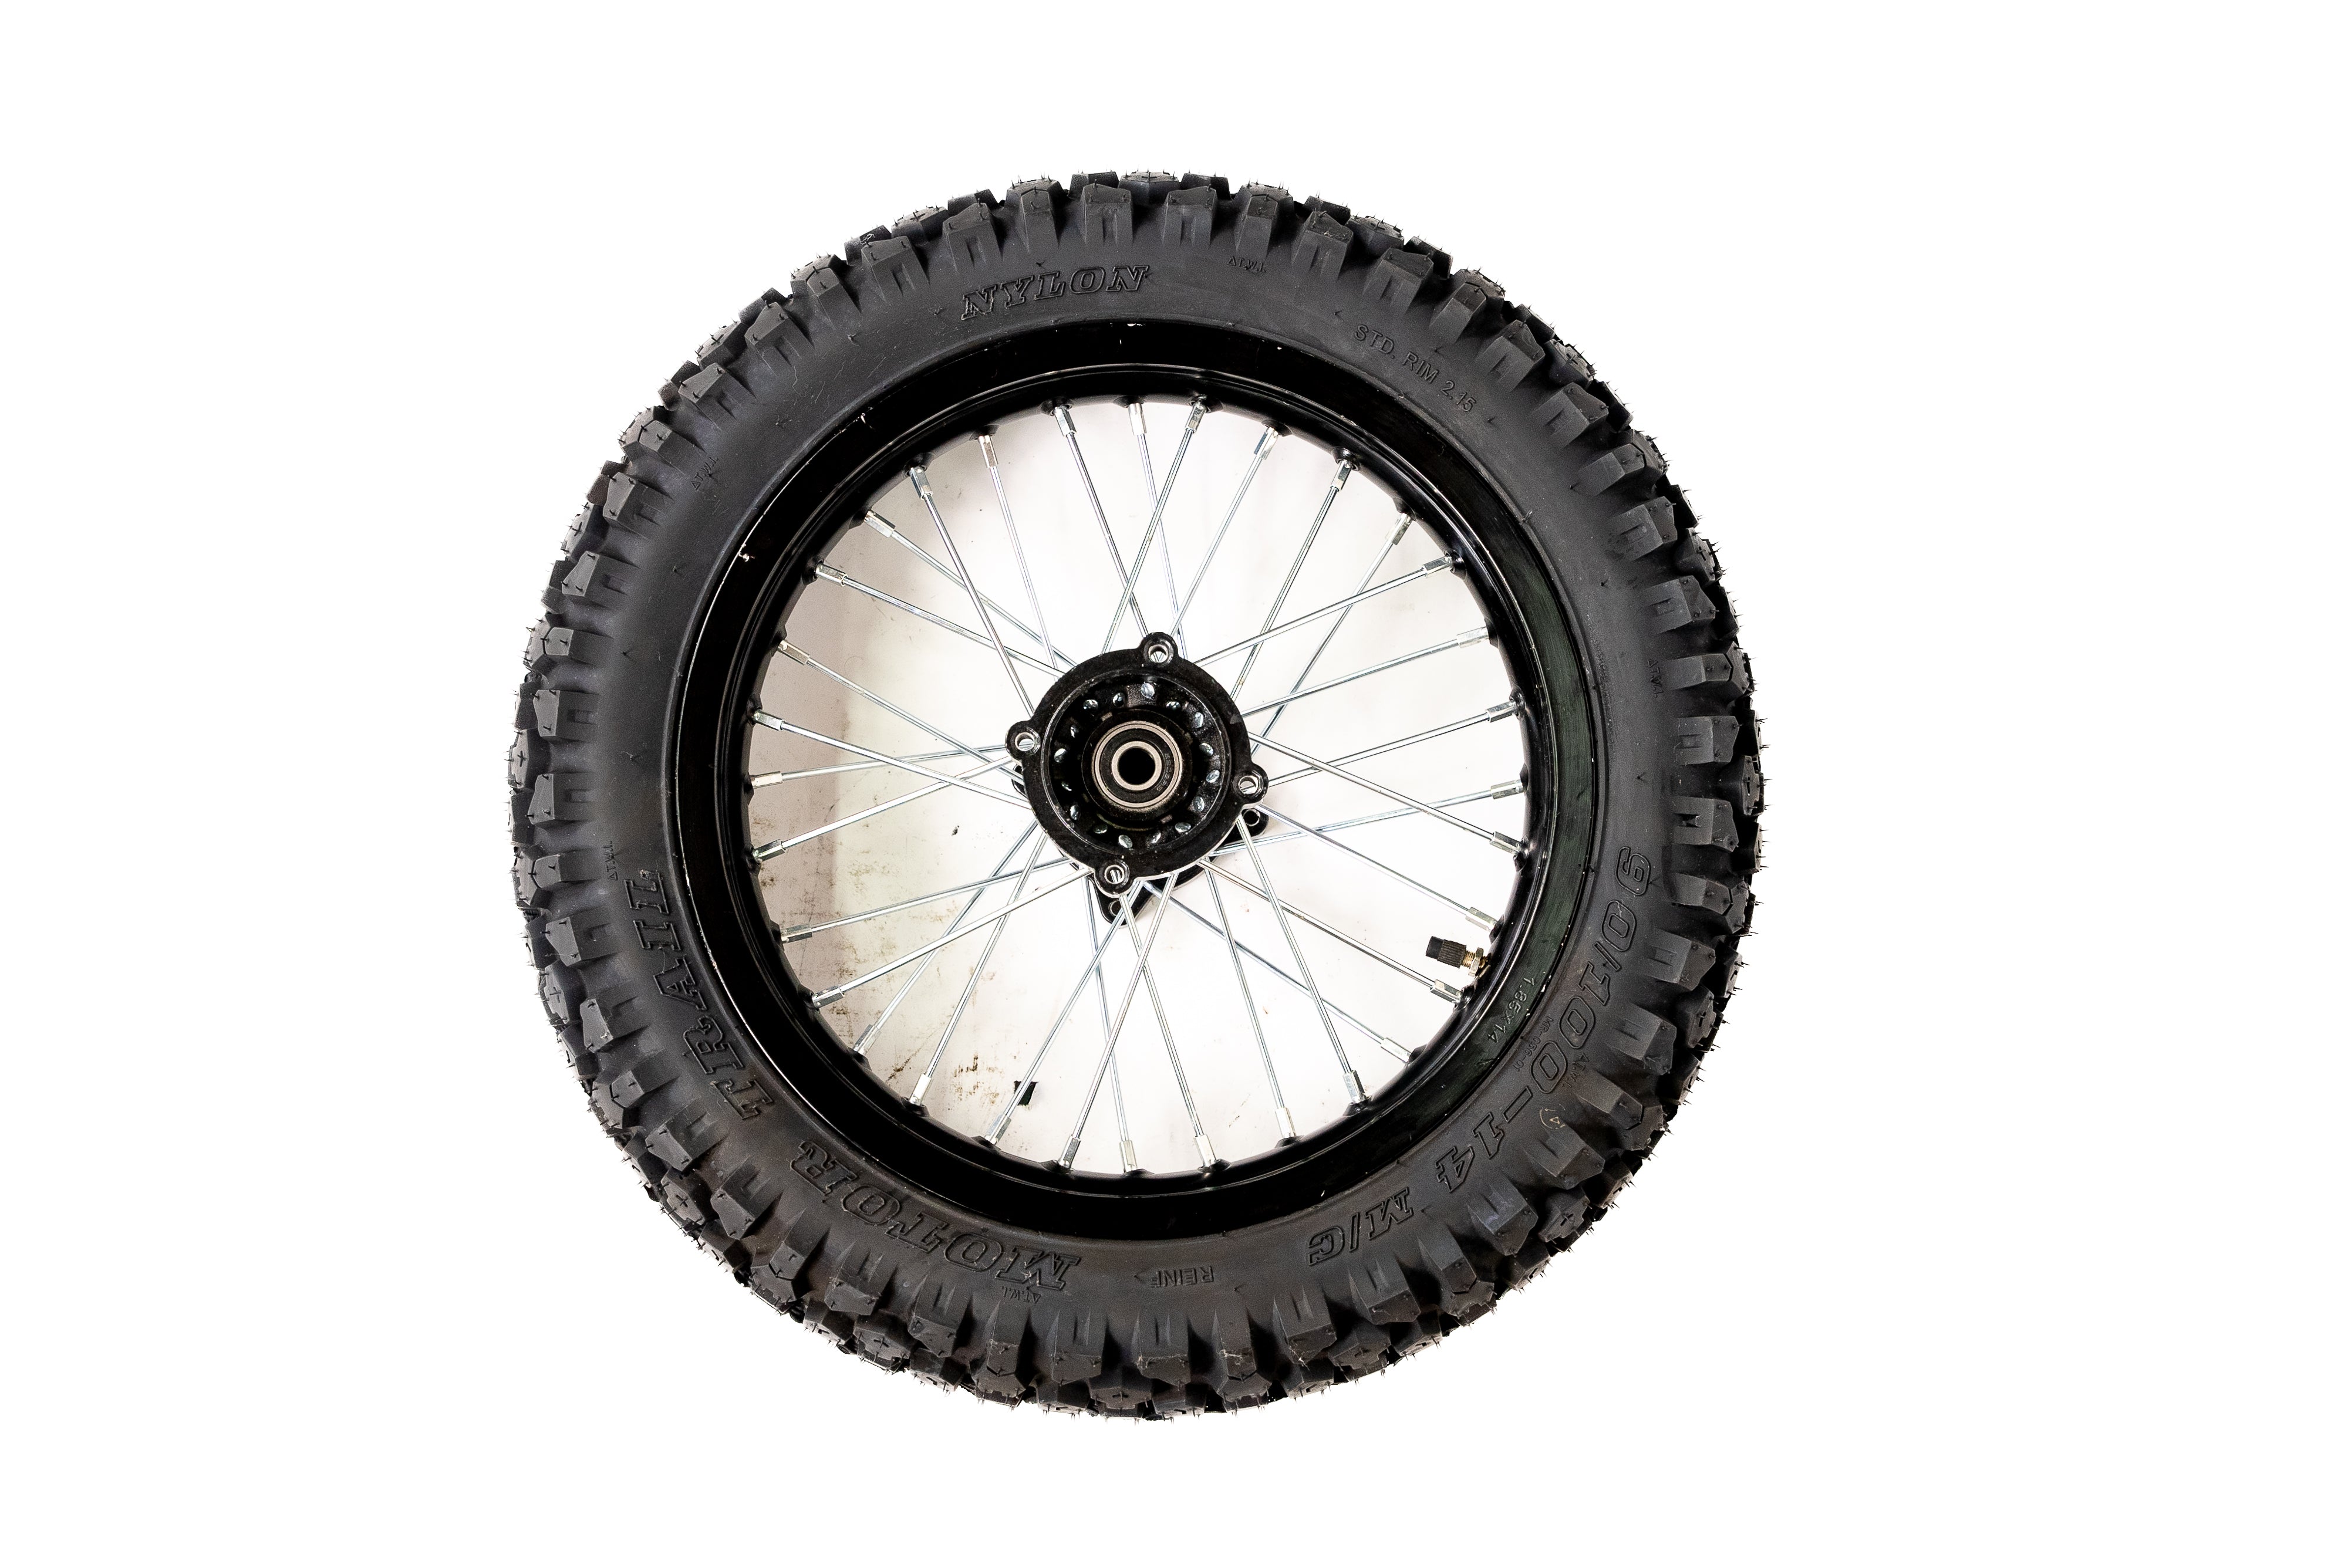 Xion Bike 14 inch rear wheel Hybrid tire